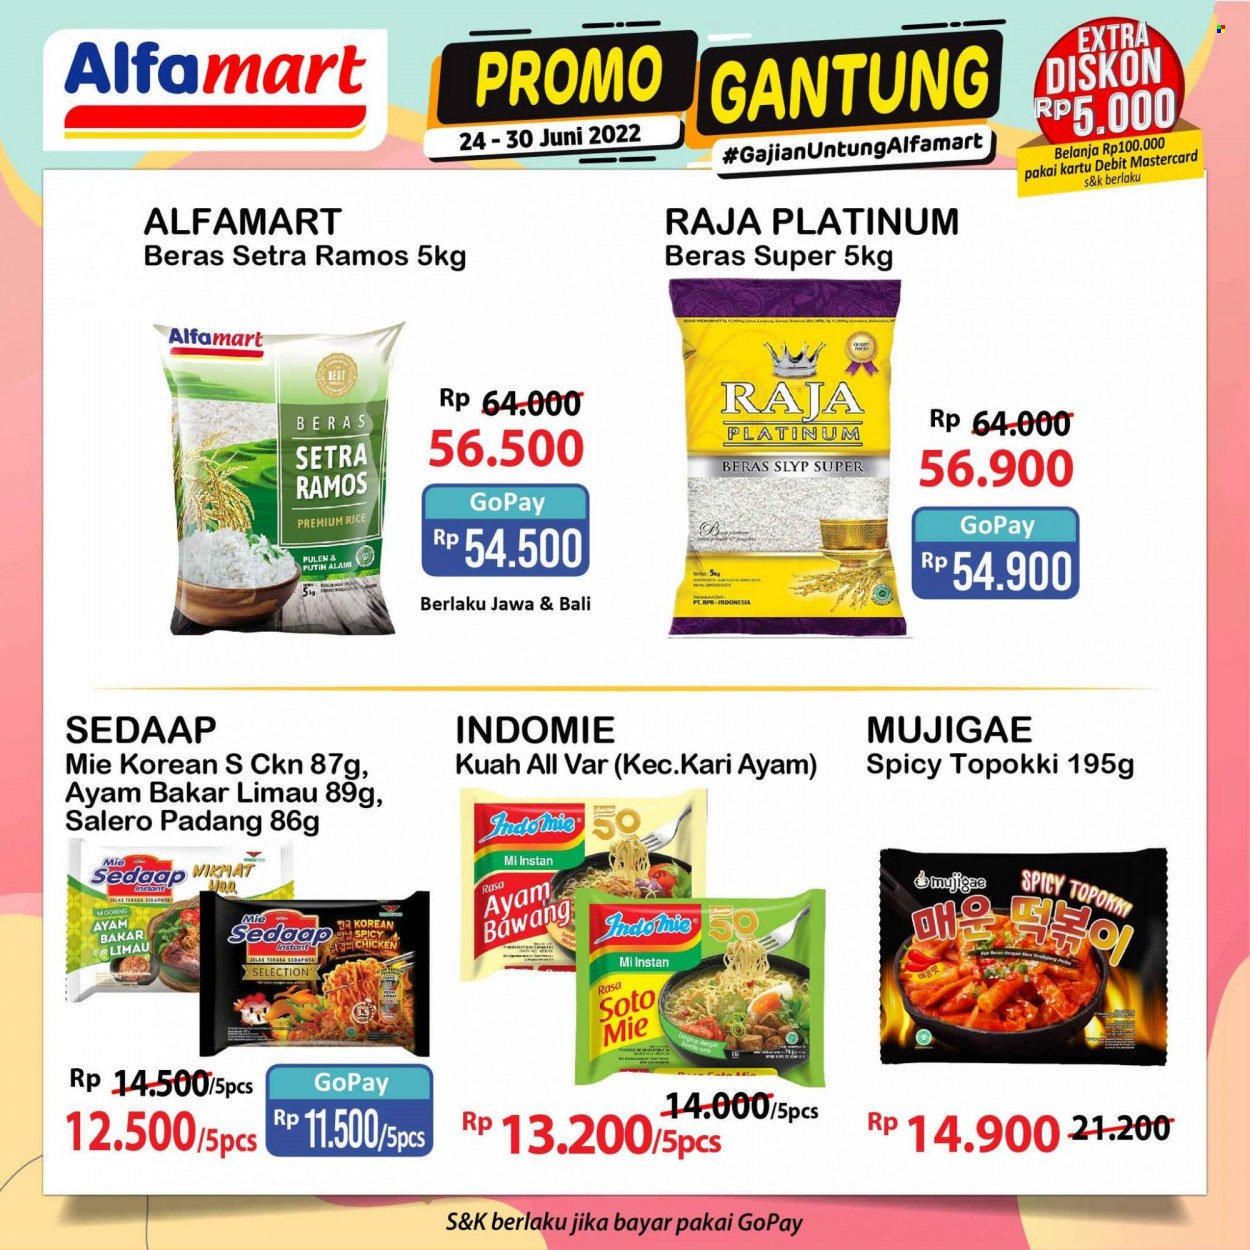 Promo Alfamart - 06/24/2022 - 06/30/2022 - Produk diskon - rice, chicken, goreng, indomie, door, beras, bawang, ayam. Halaman 9.